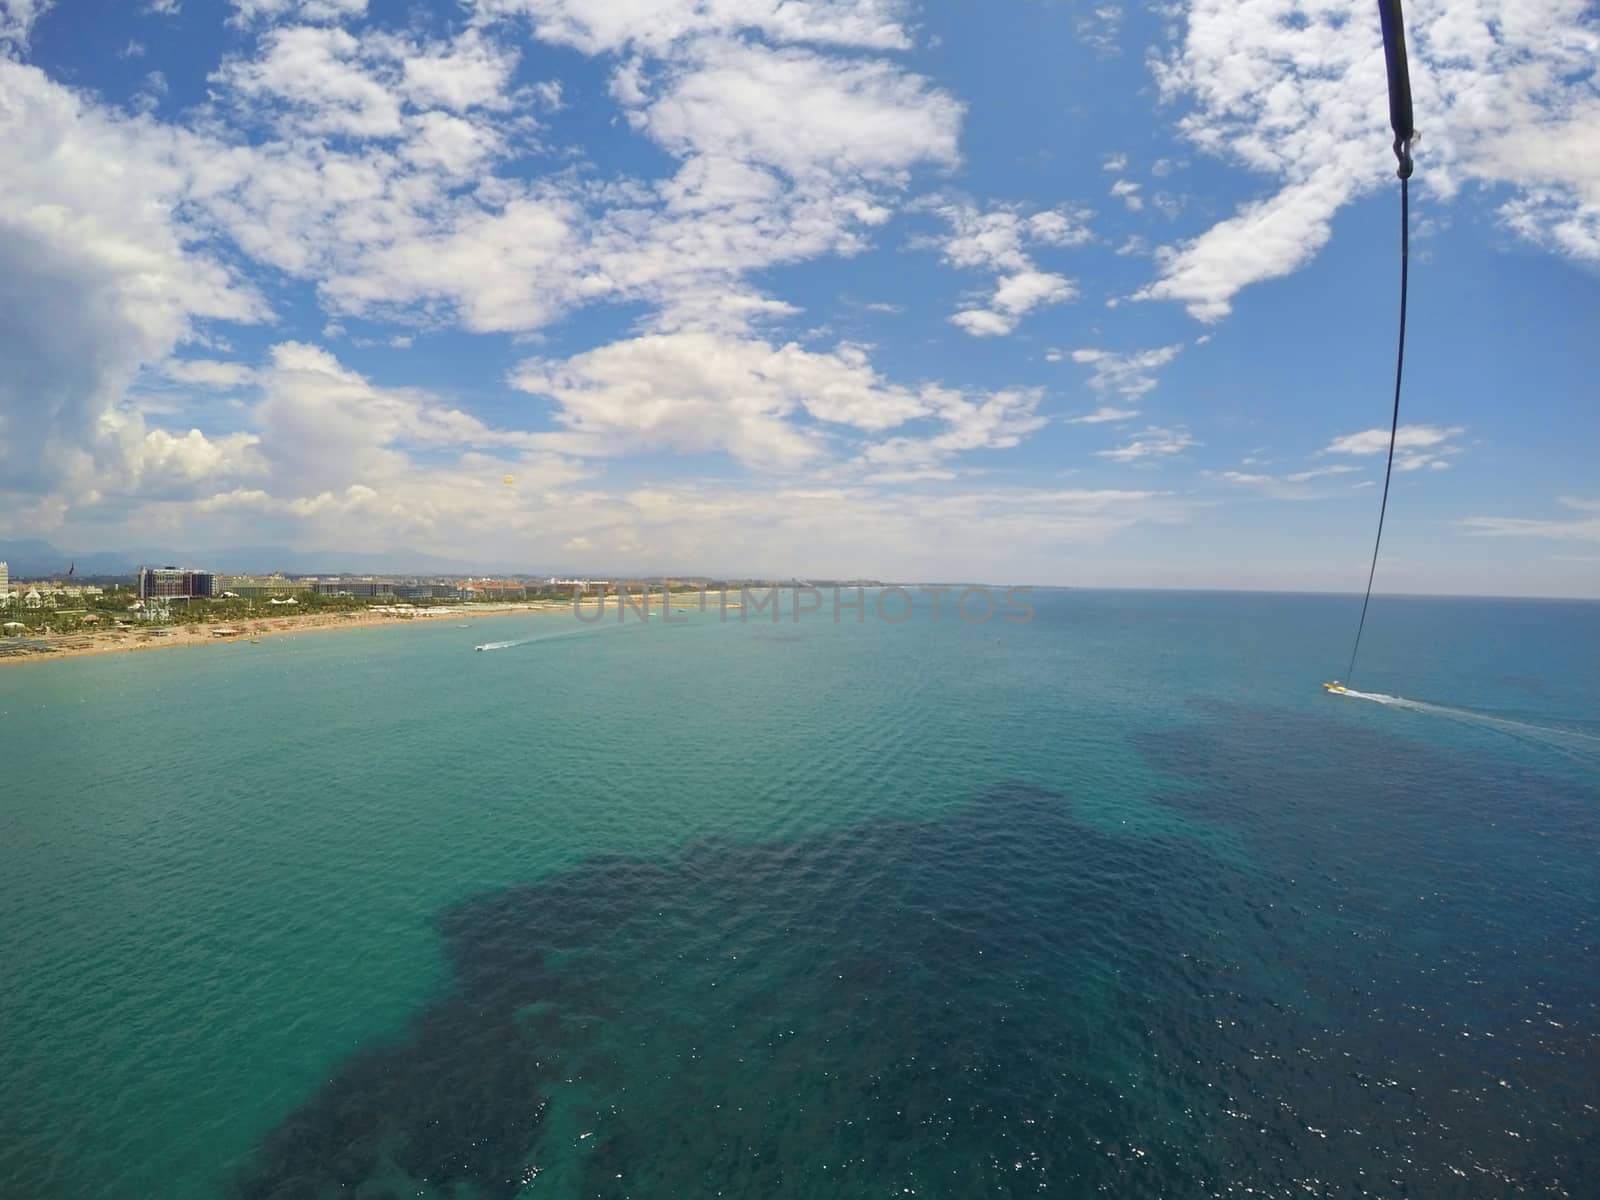 Aerial view of tropical resort during parasailing (speedboat dragging parachute), mediterranean beach in Turkey